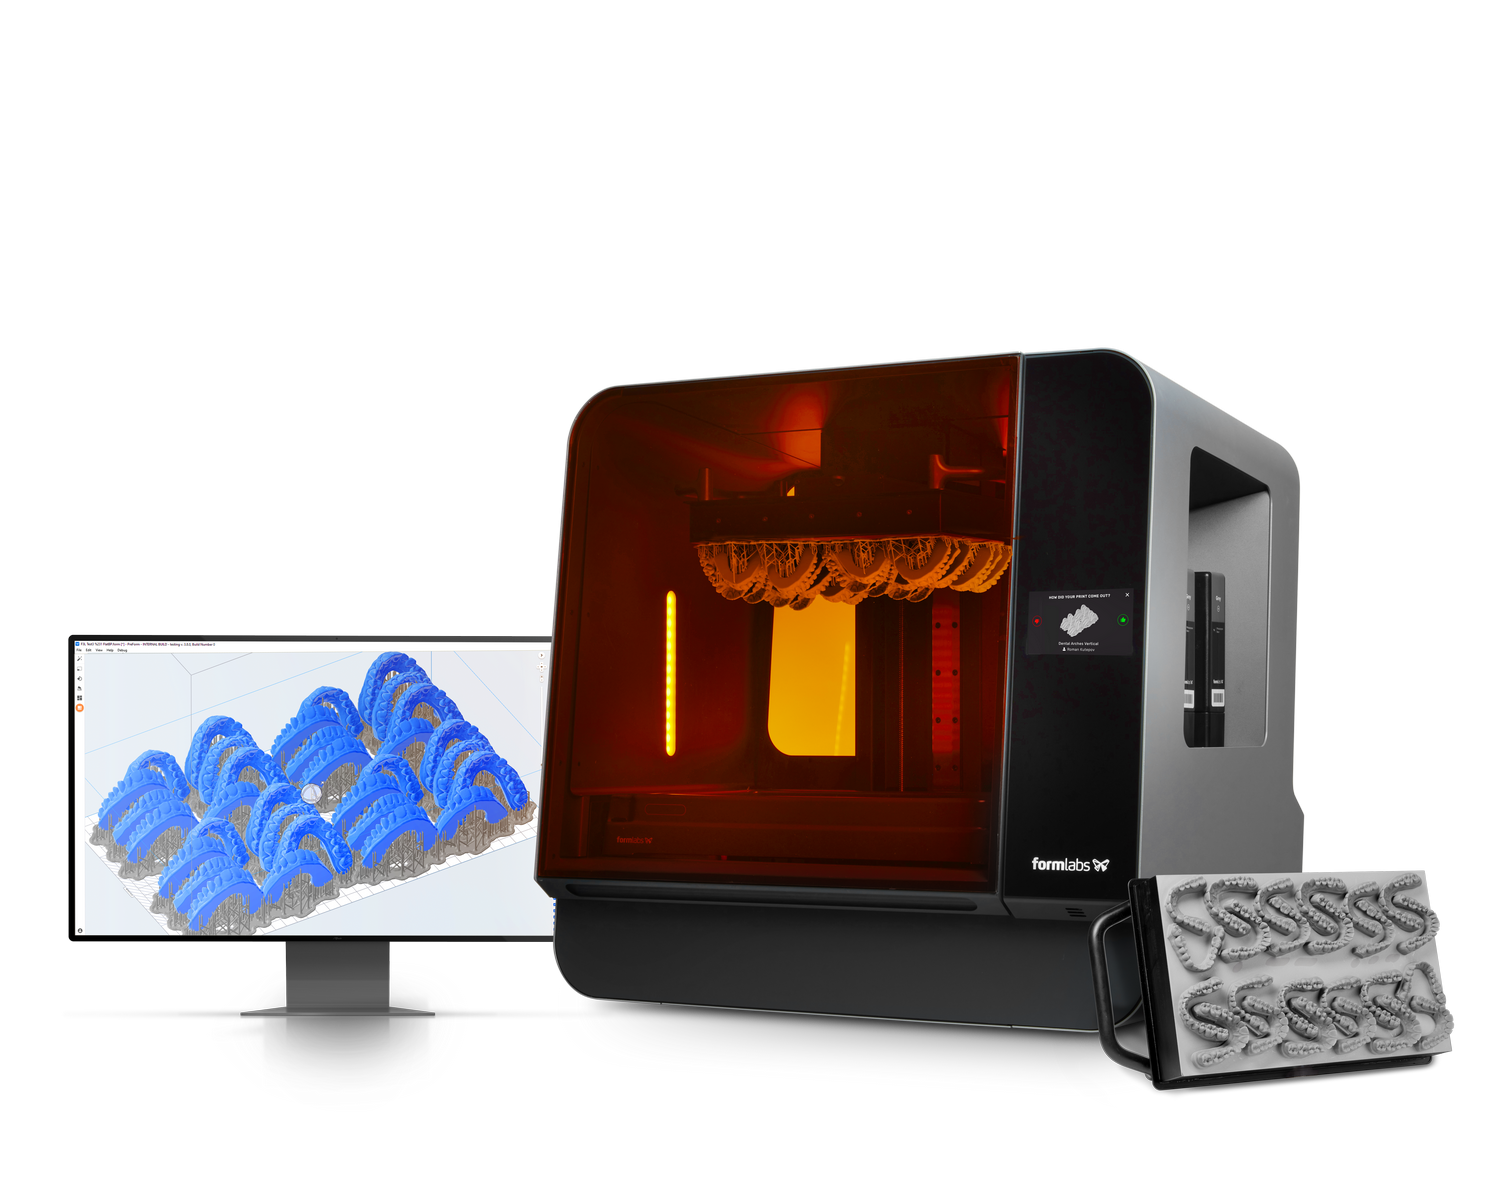 Resin based 3d printers